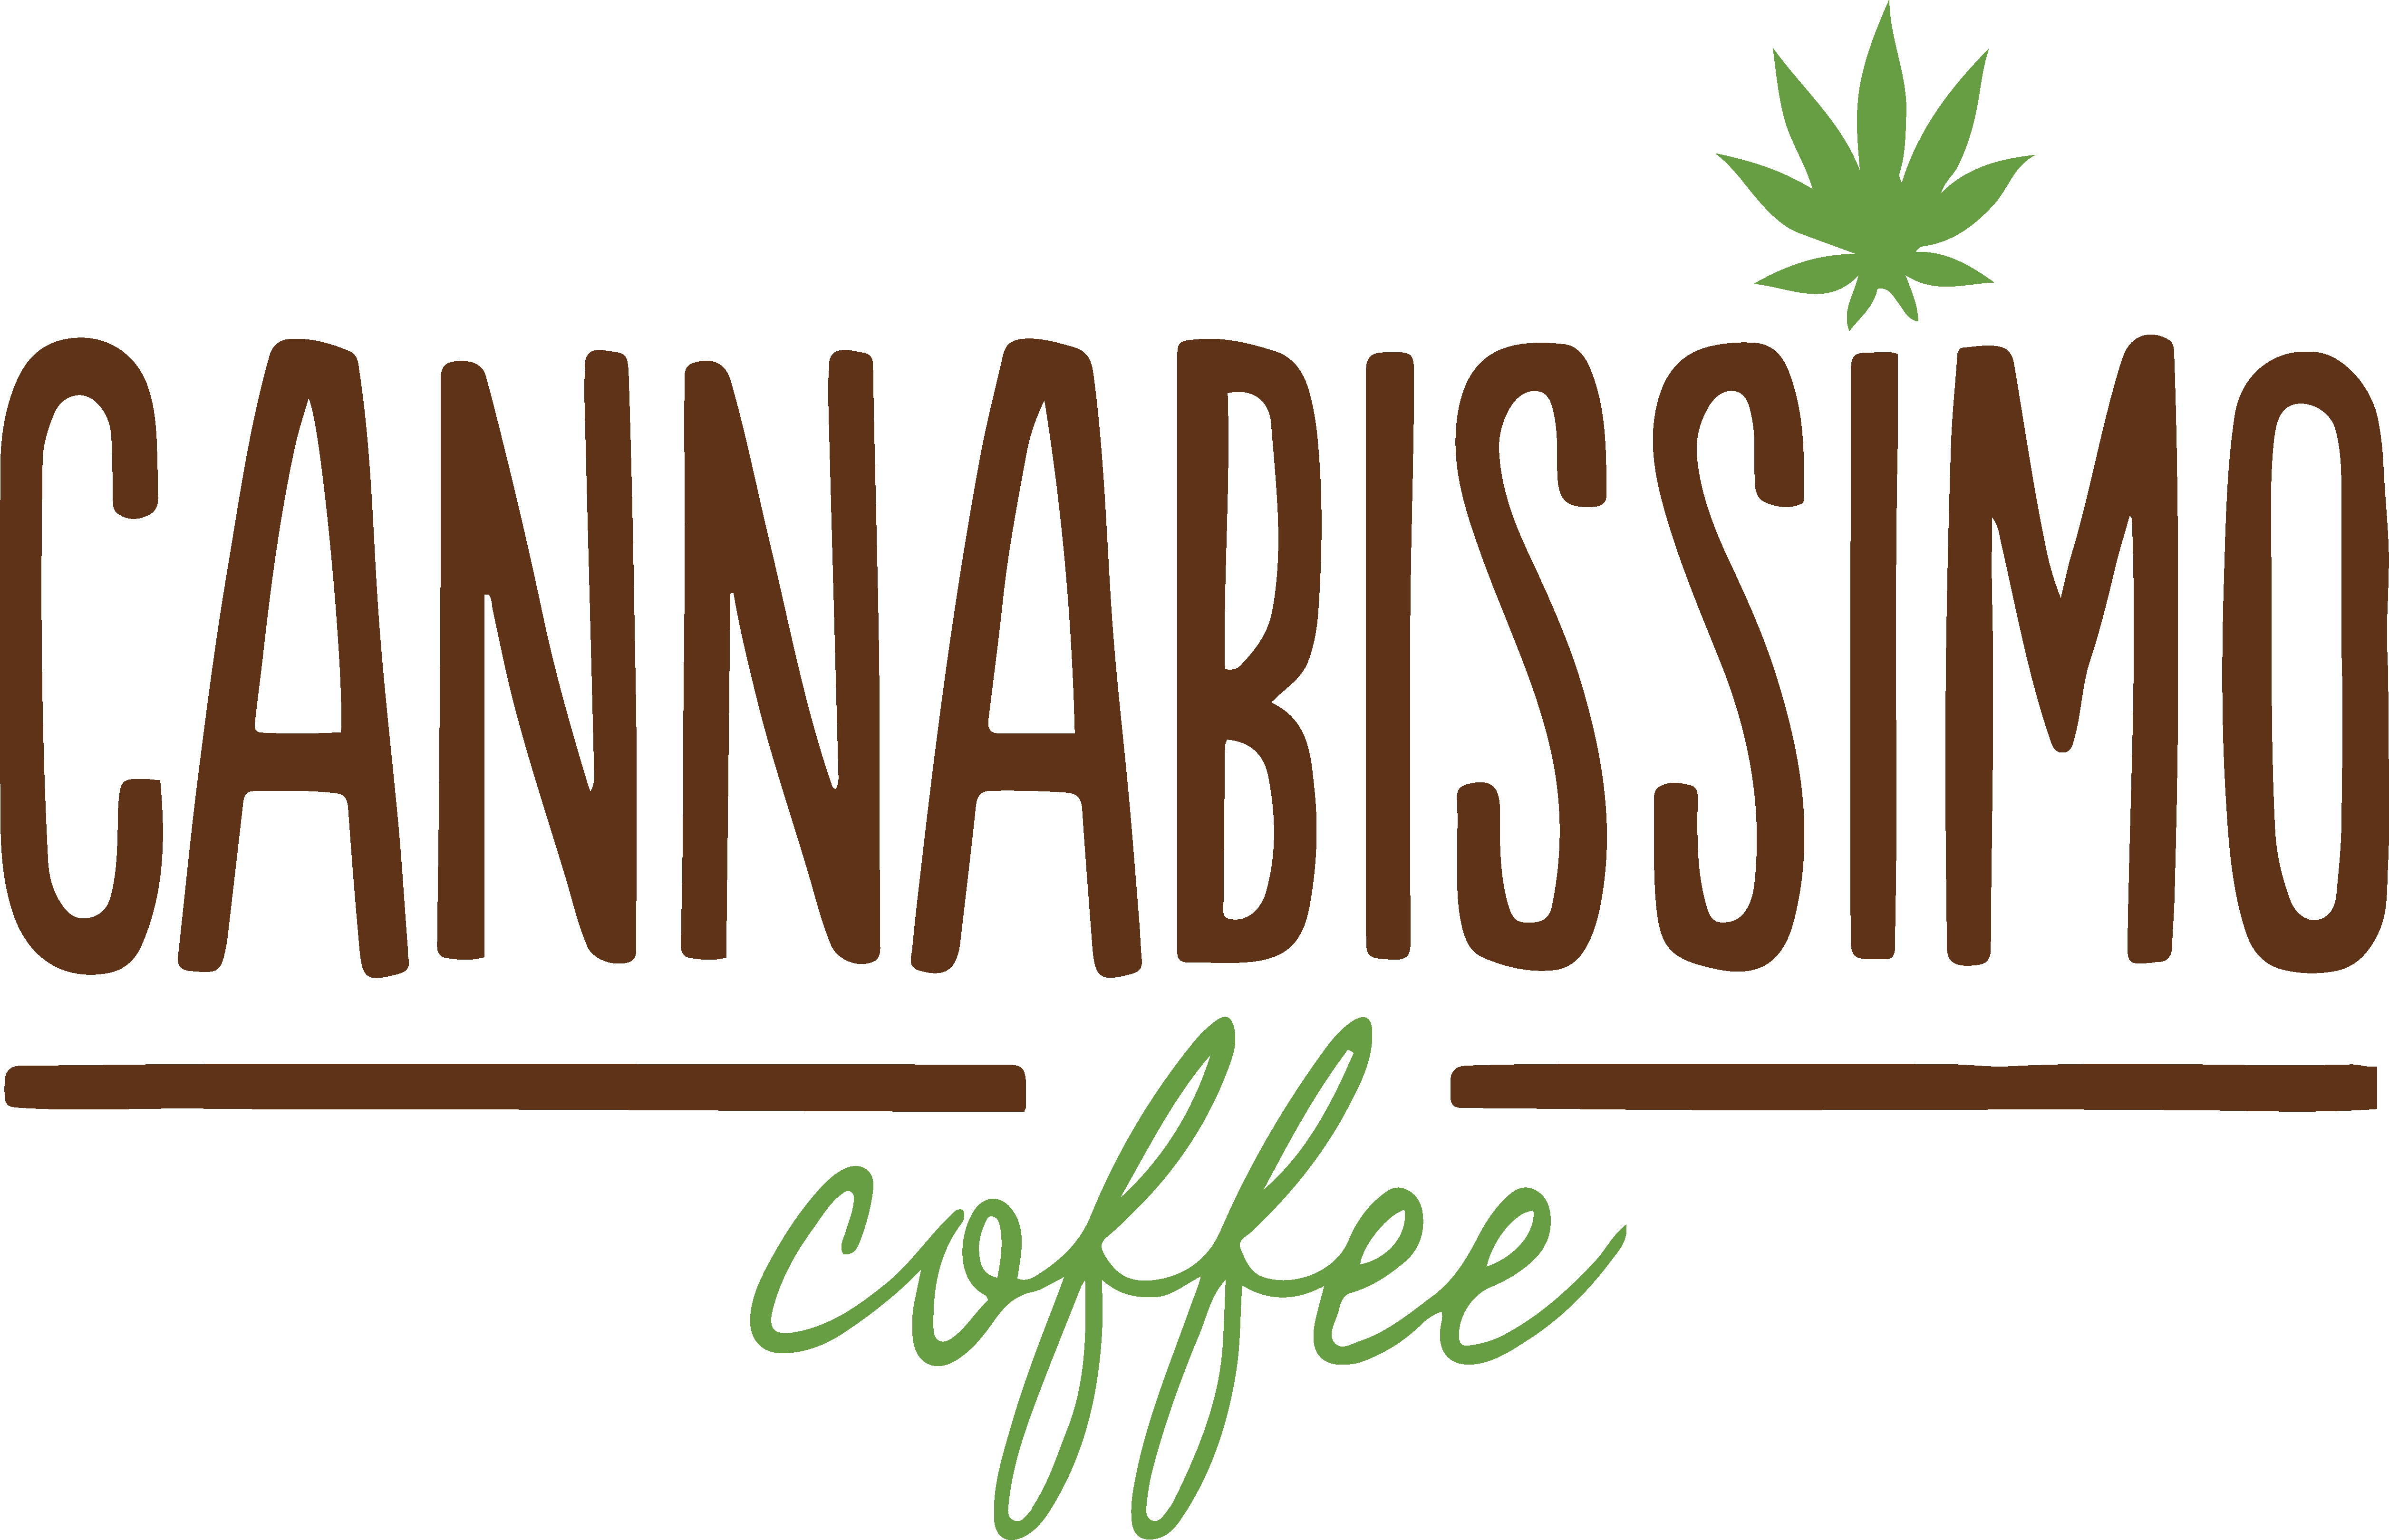 Cannabissimo coffee logo